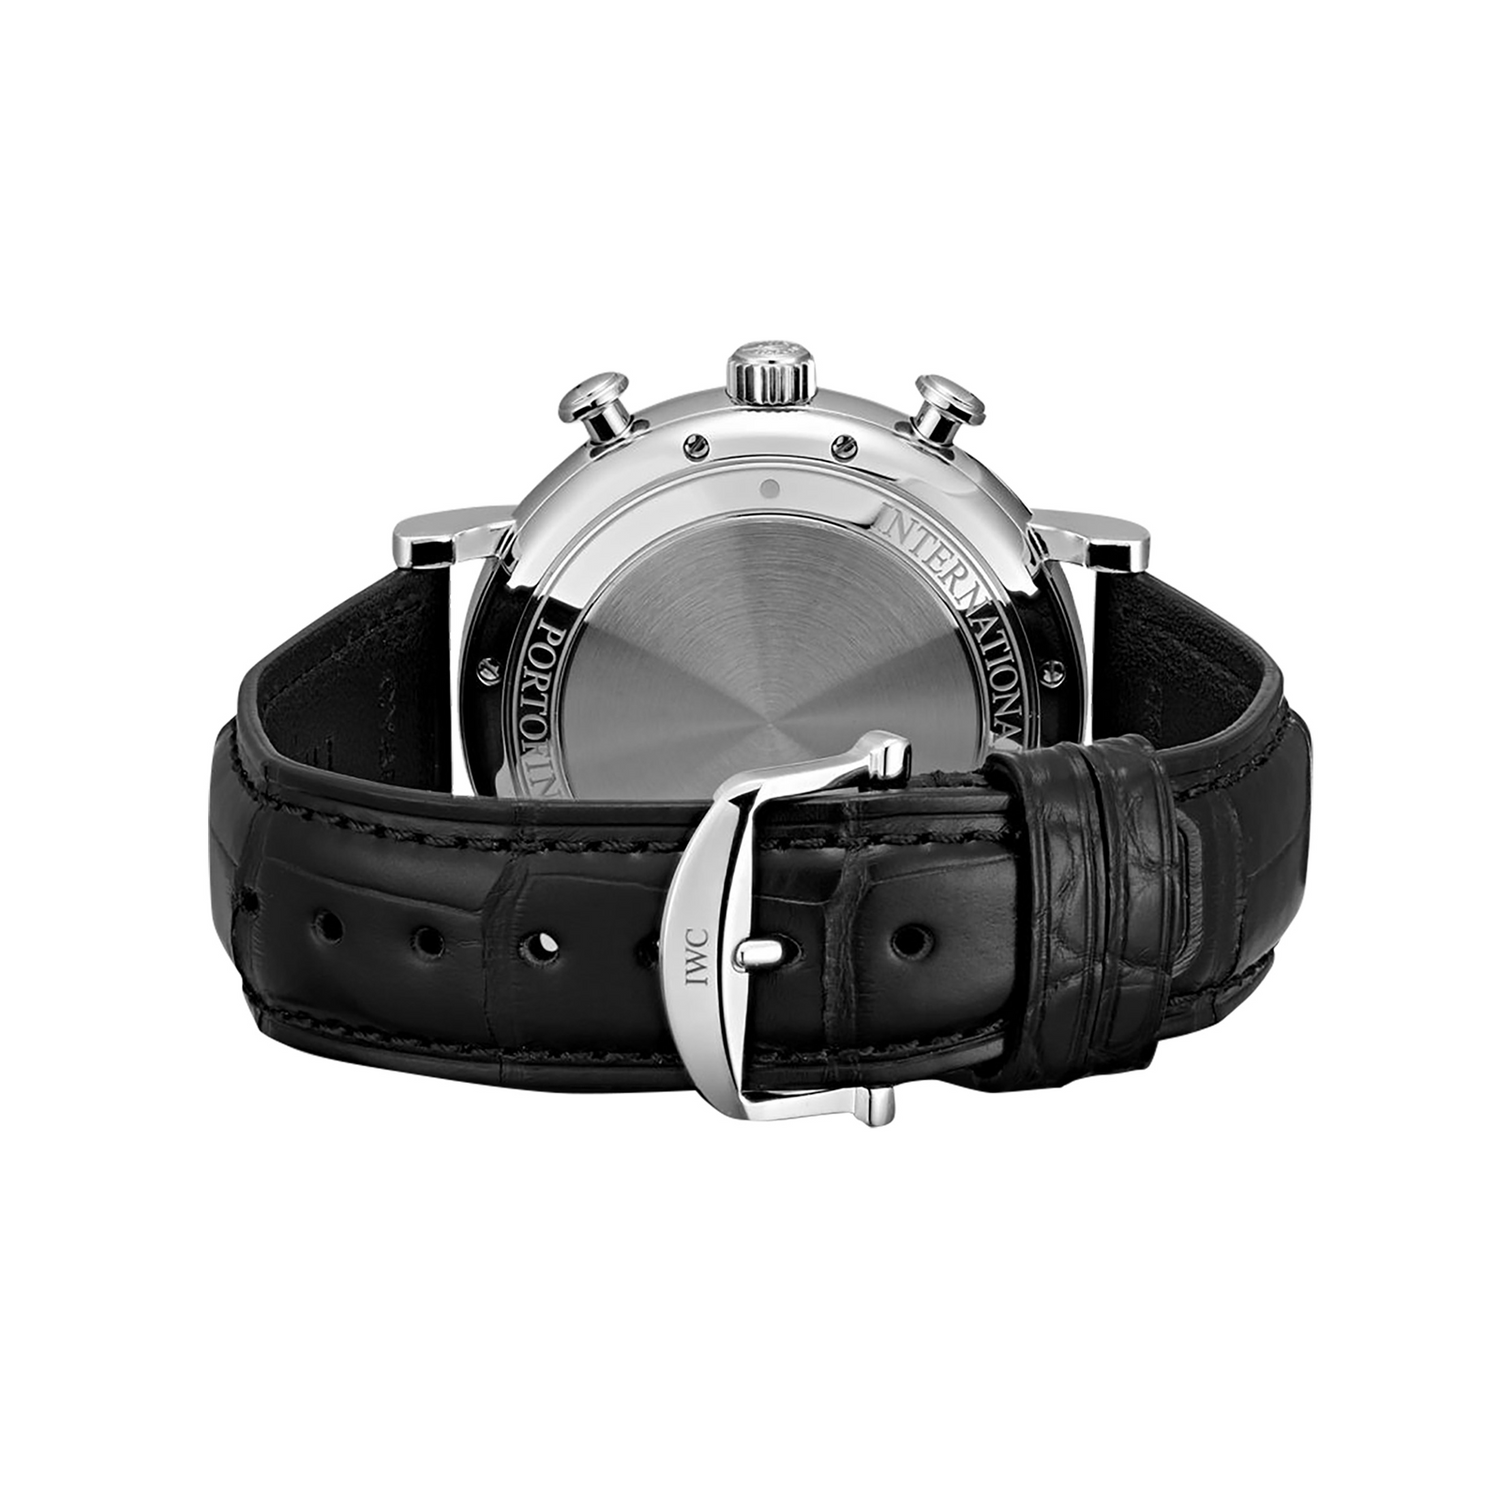 IWC Portofino Chronograph Mens 42mm Watch - IW391029